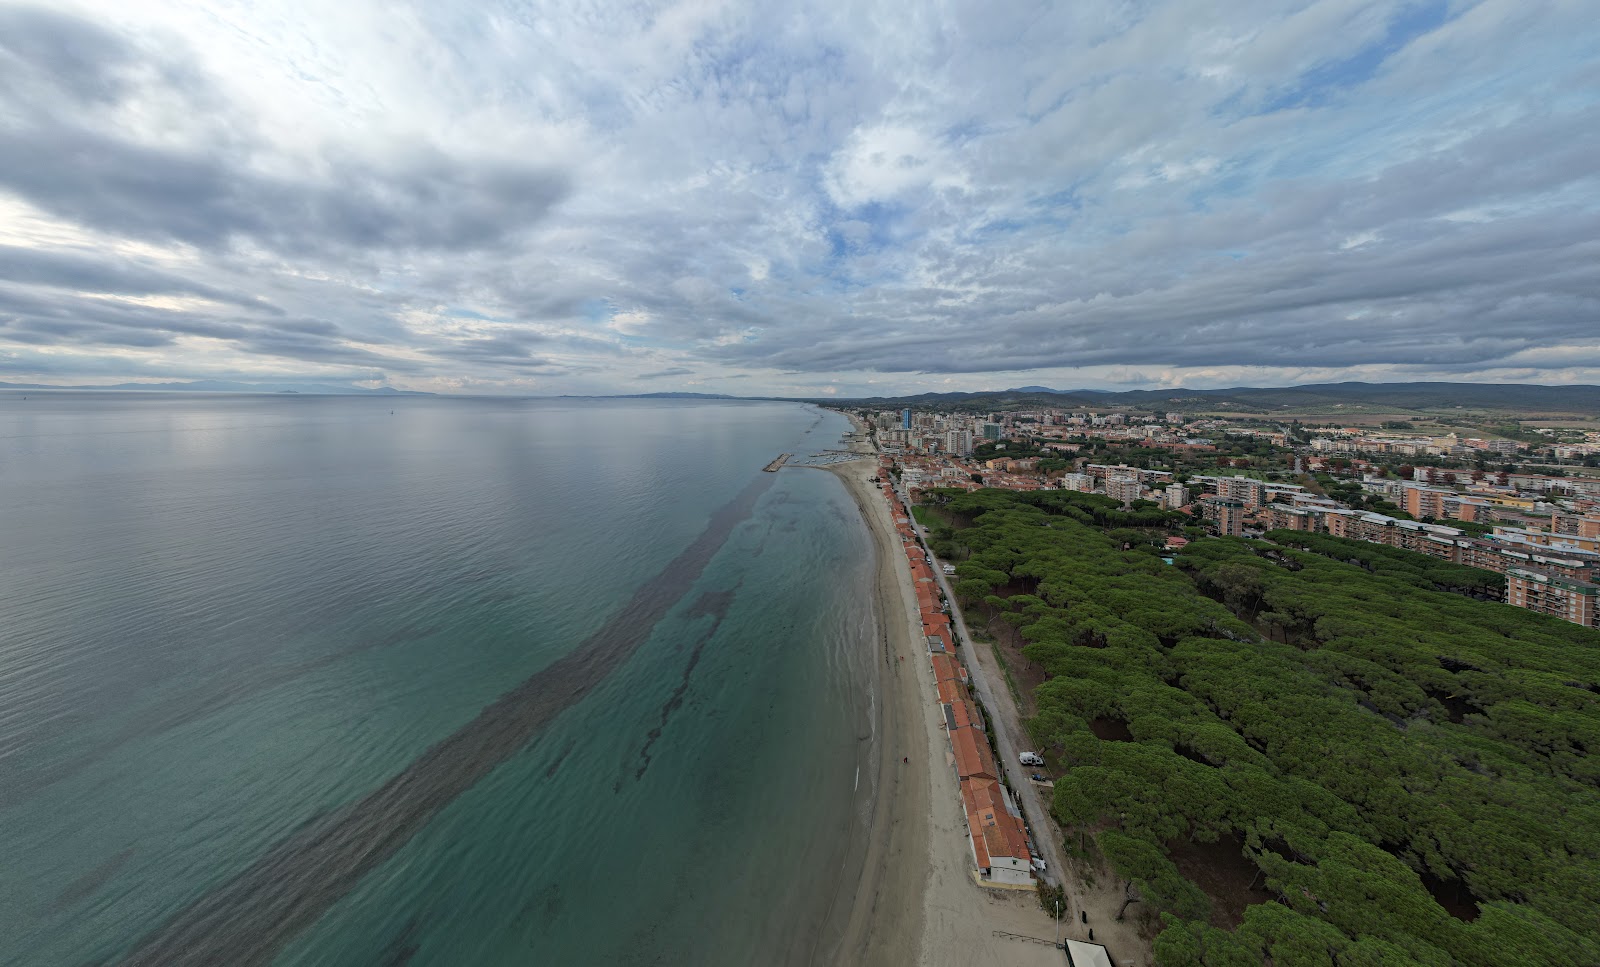 Foto von Spiaggia di Follonica mit türkisfarbenes wasser Oberfläche